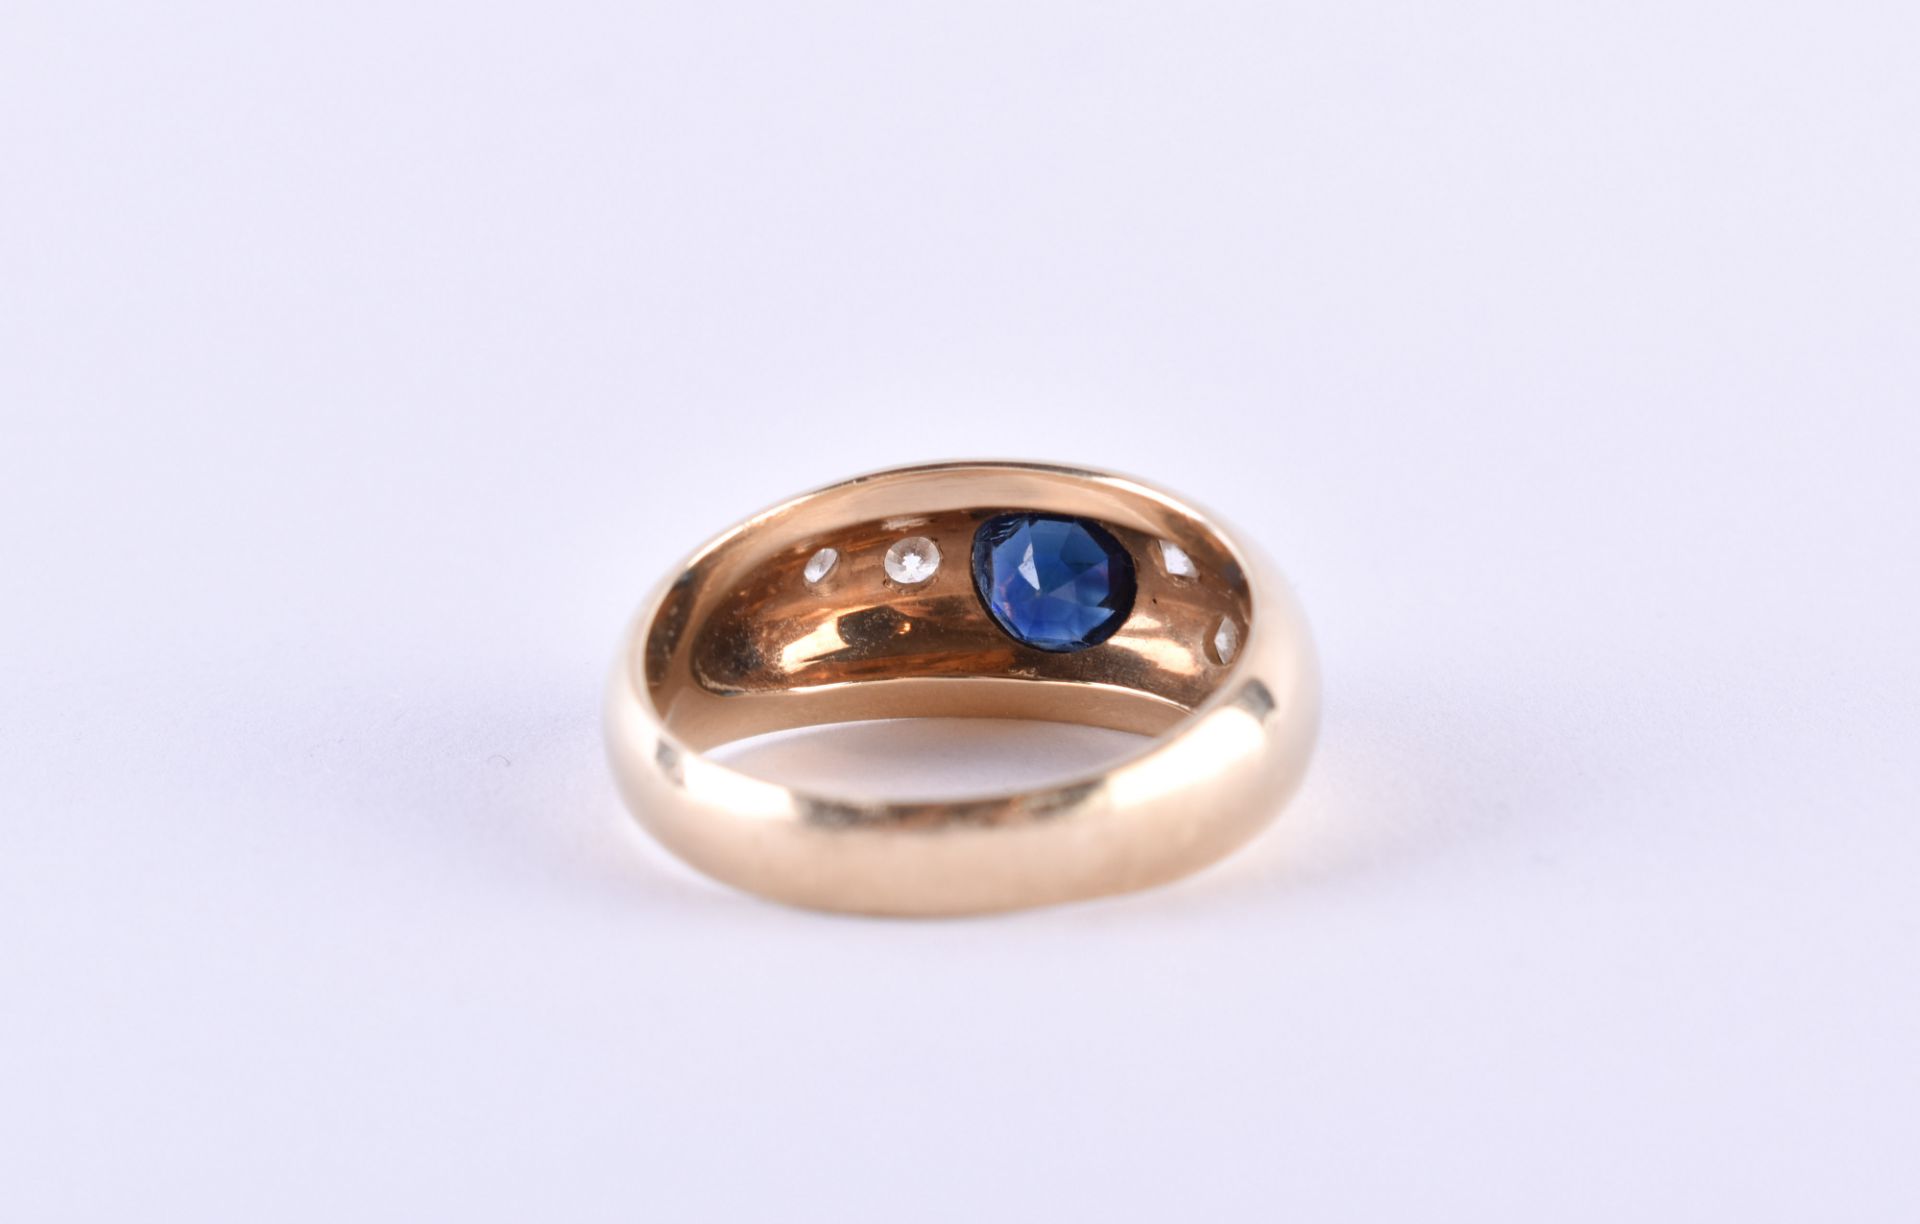 Brilliant sapphire ring - Image 2 of 4